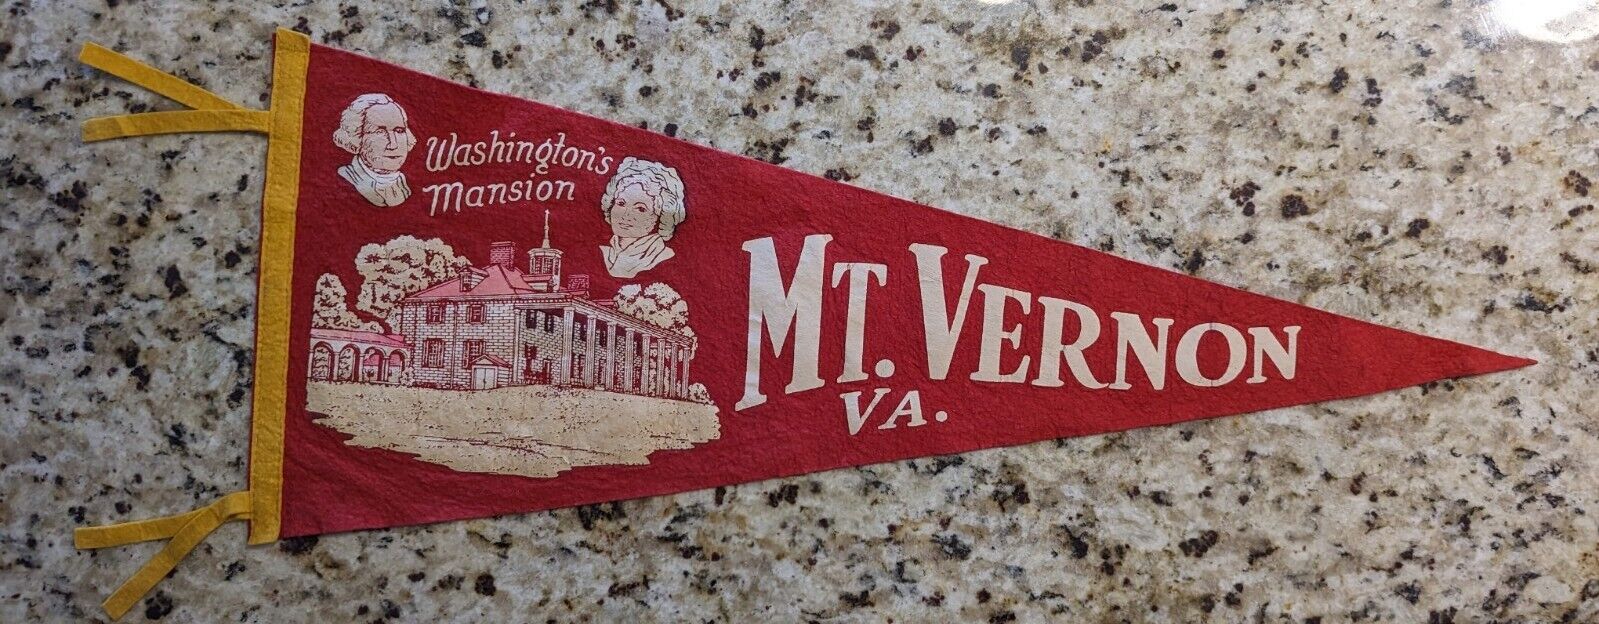 VINTAGE 1940 MT. VERNON VA. WASHINGTON'S MANSION FELT PENNANT 29